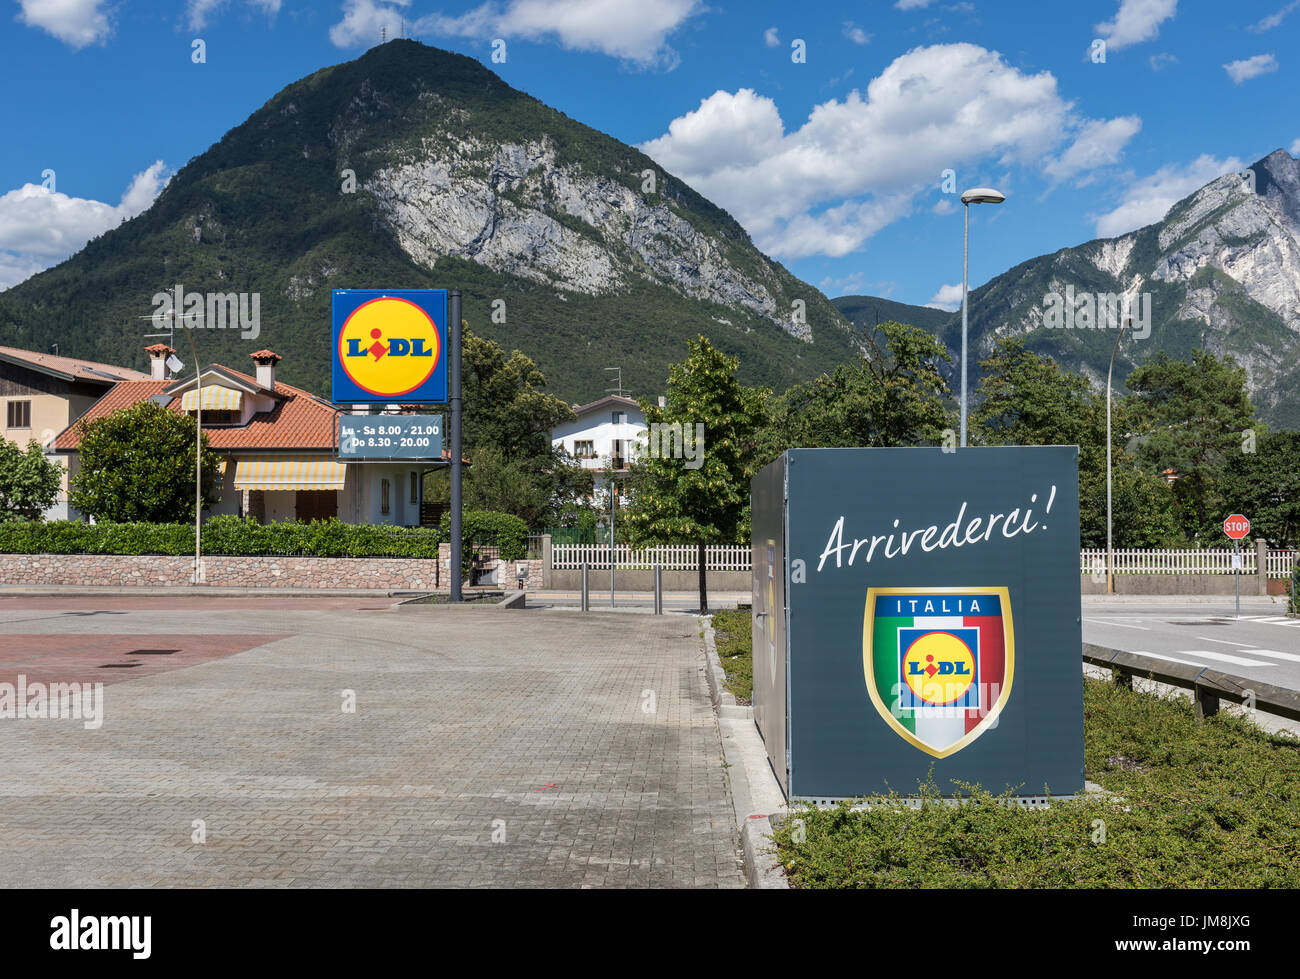 Lidl supermarket sign in Tolmezzo, Italy Stock Photo